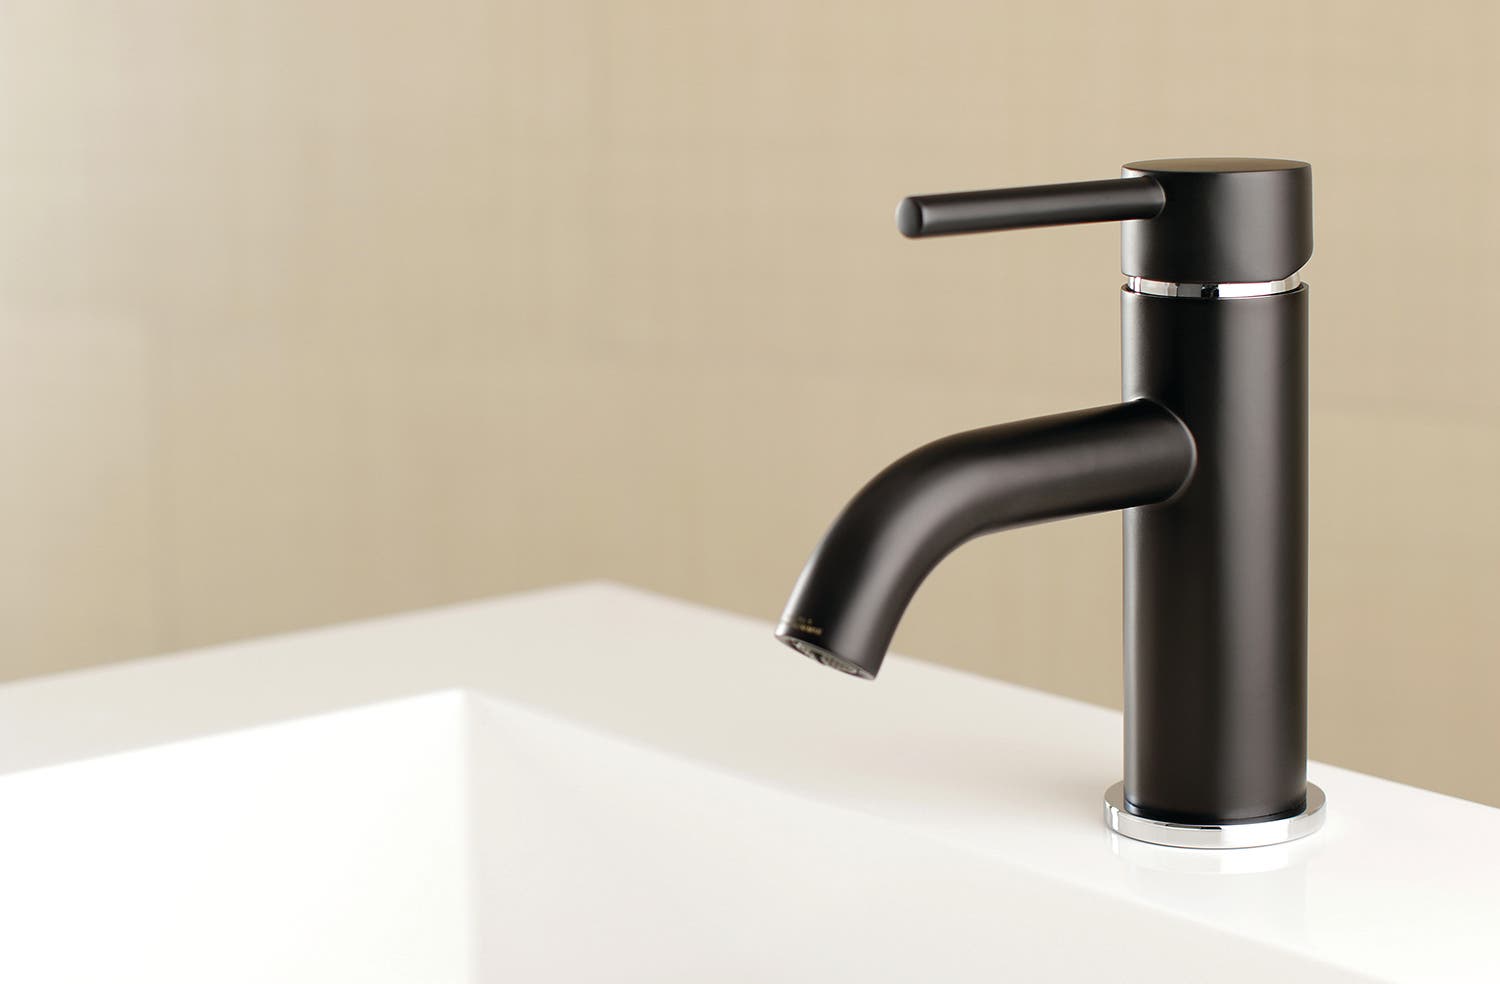 FAUCET FEATURE 5: Profile of the LS8227DL Concord Single Handle Lavatory Faucet